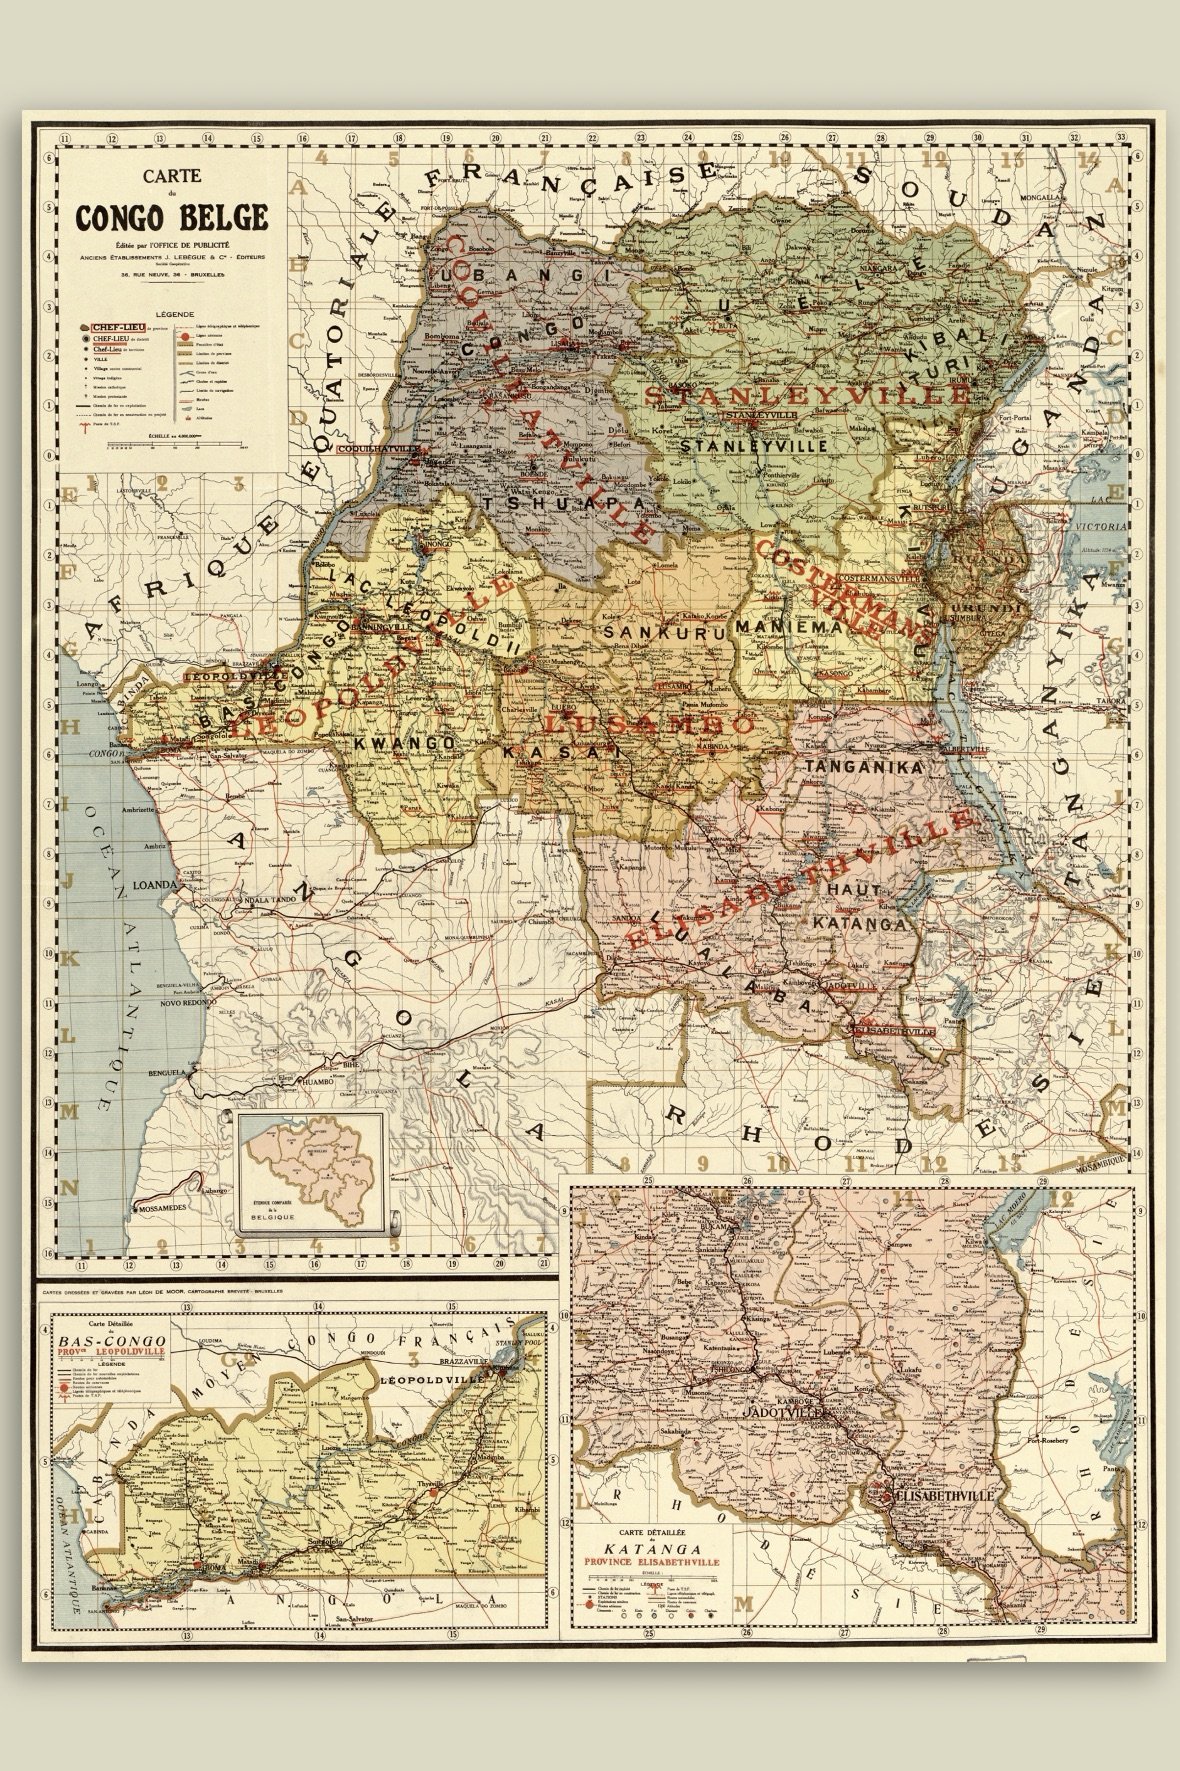 Map of the Belgian Congo